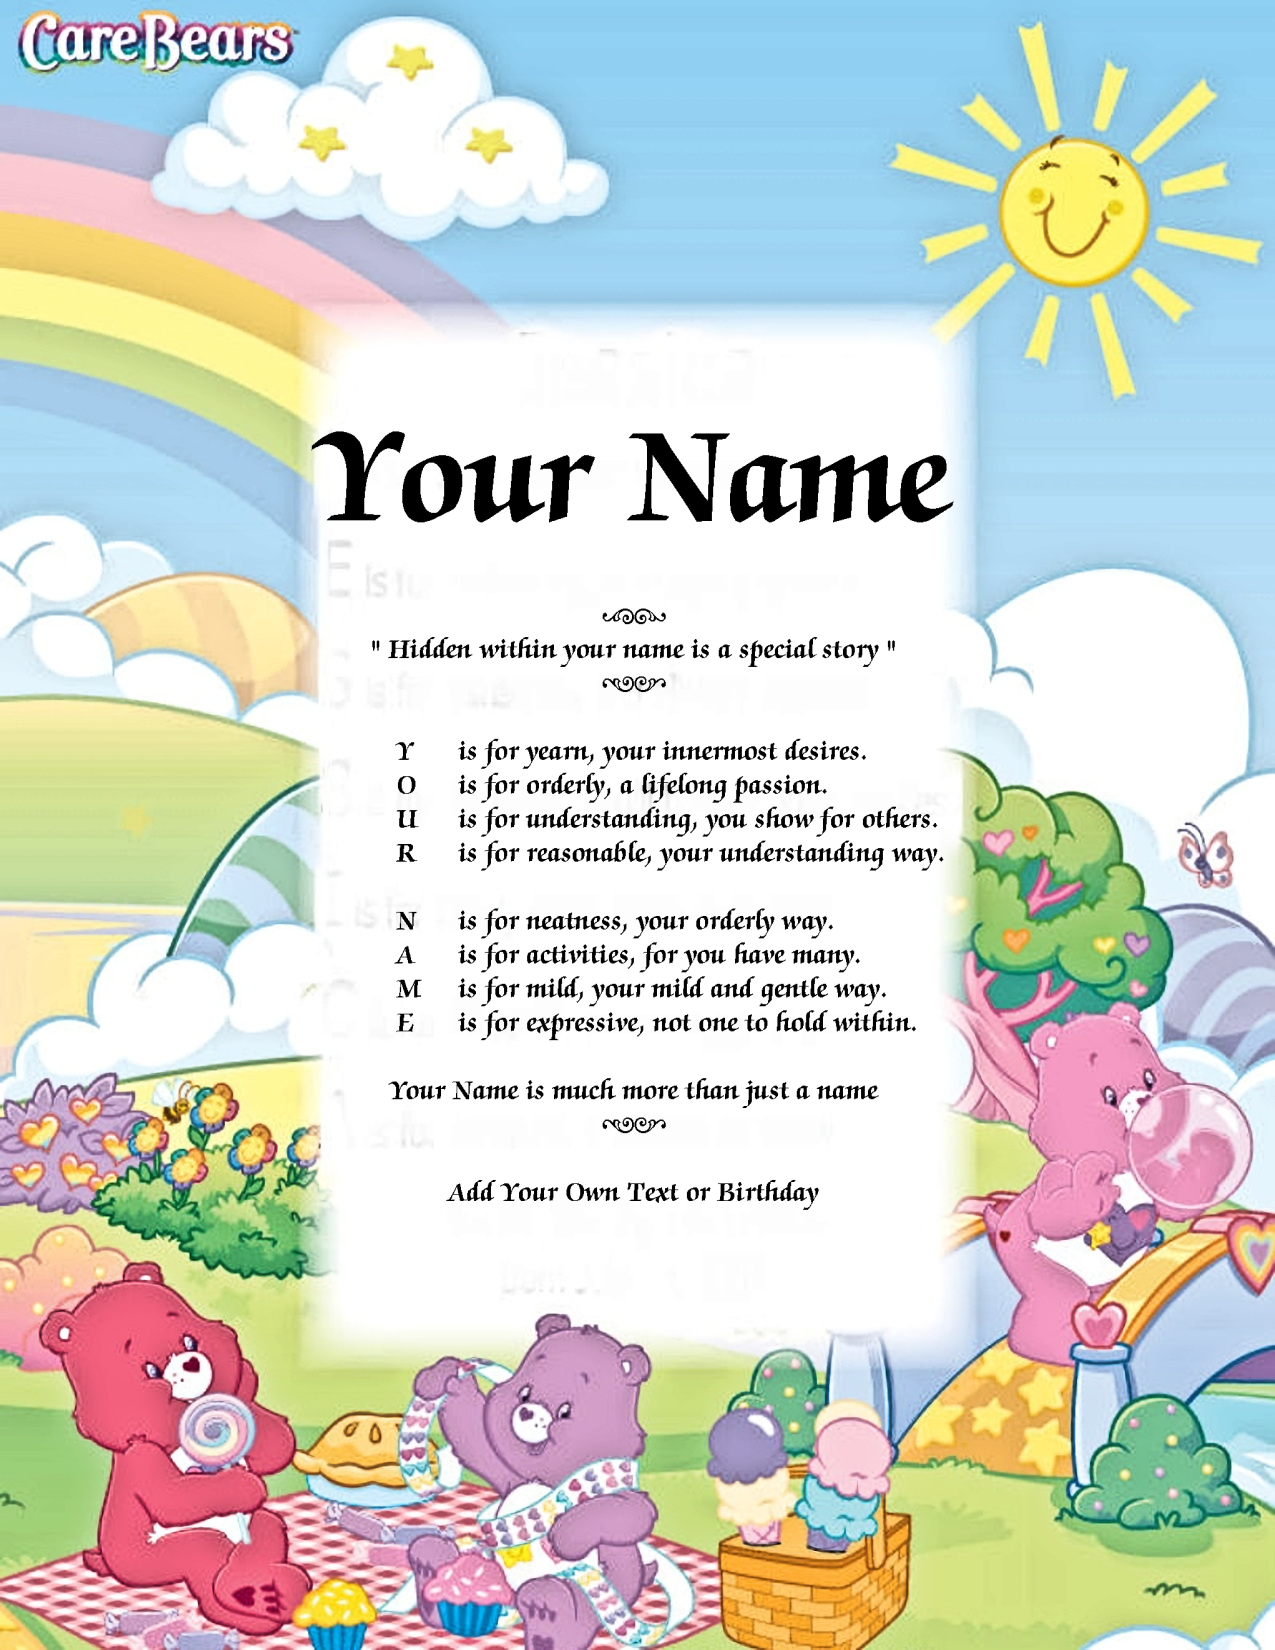 Care Bears Picnic Child Name Poem Story